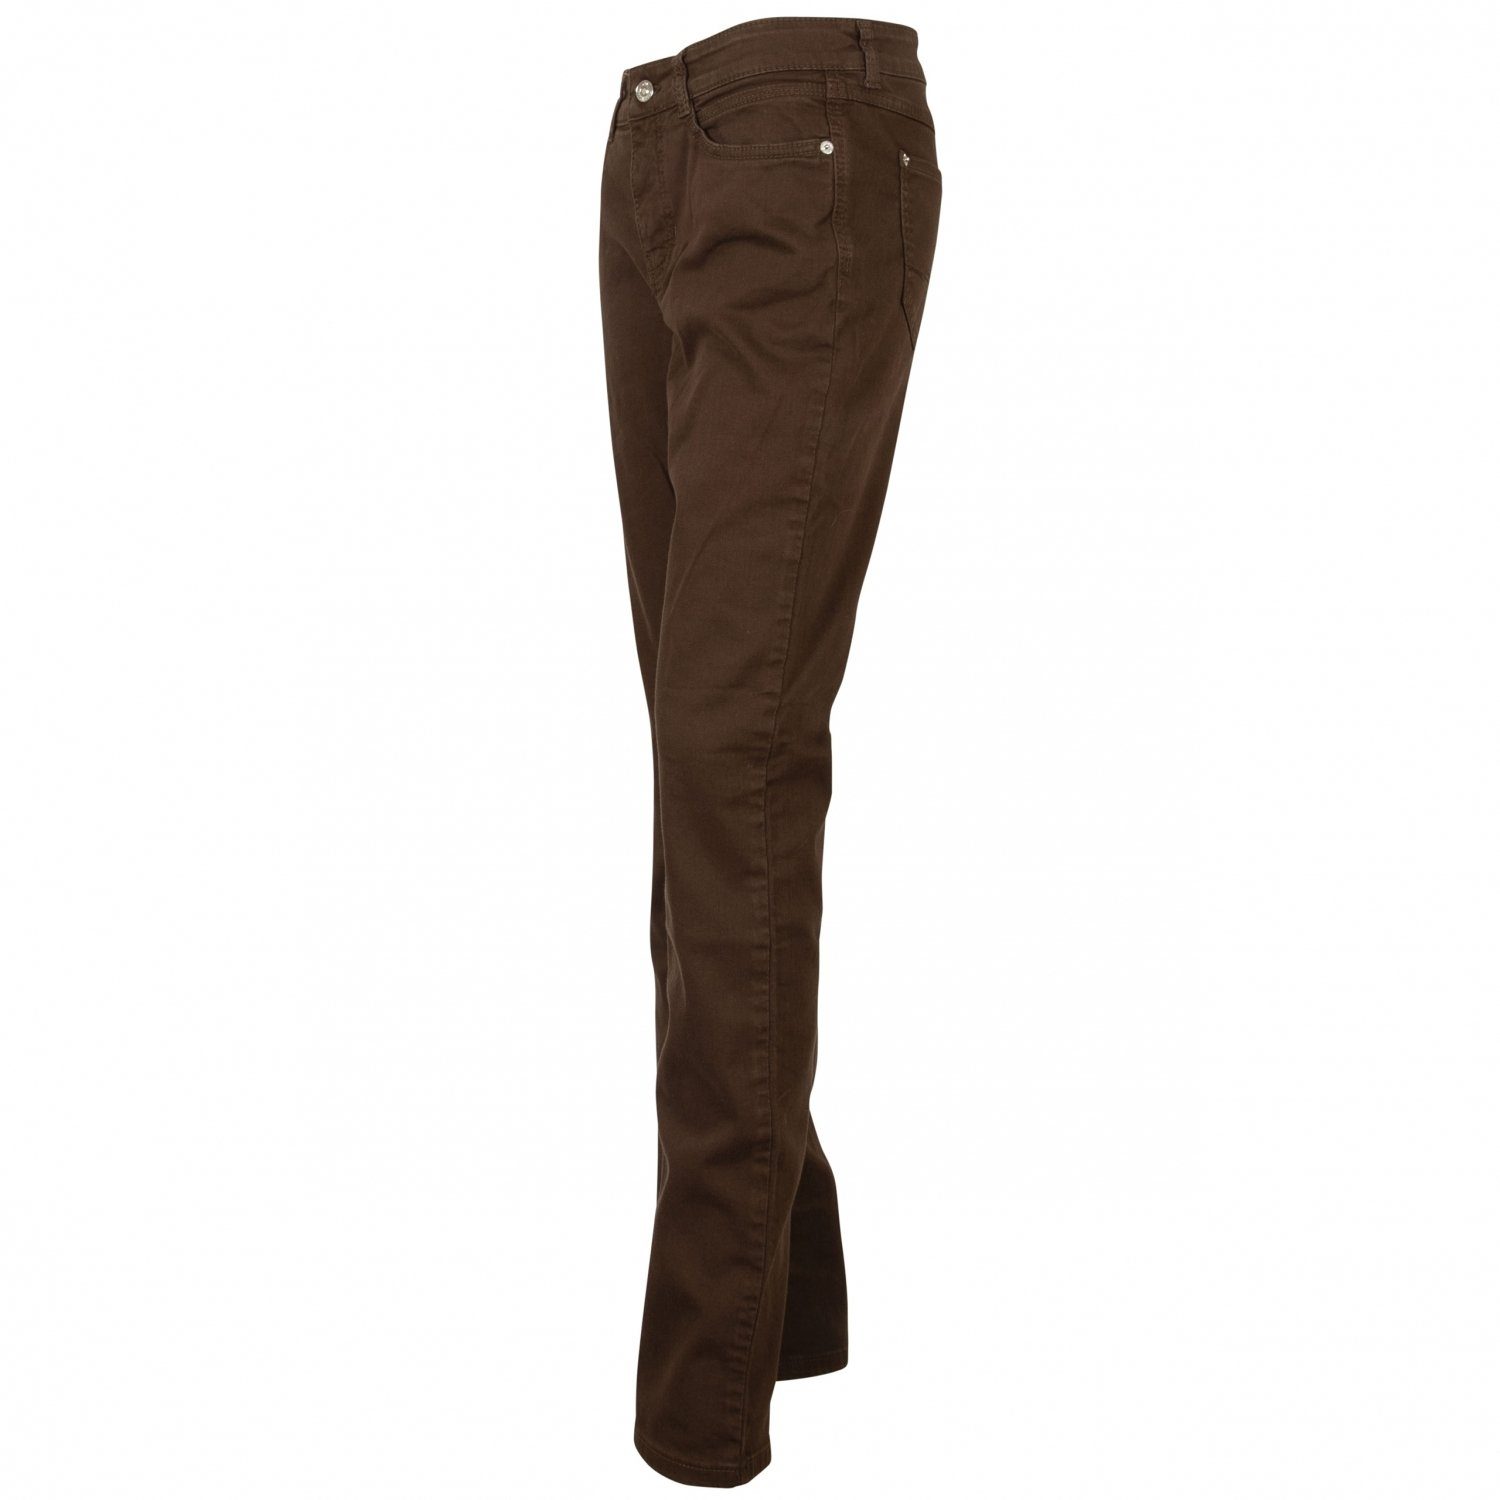 Perfect braun fawn PPT brown Jeans Damen Fit ANGELA 5-Pocket-Jeans - MAC